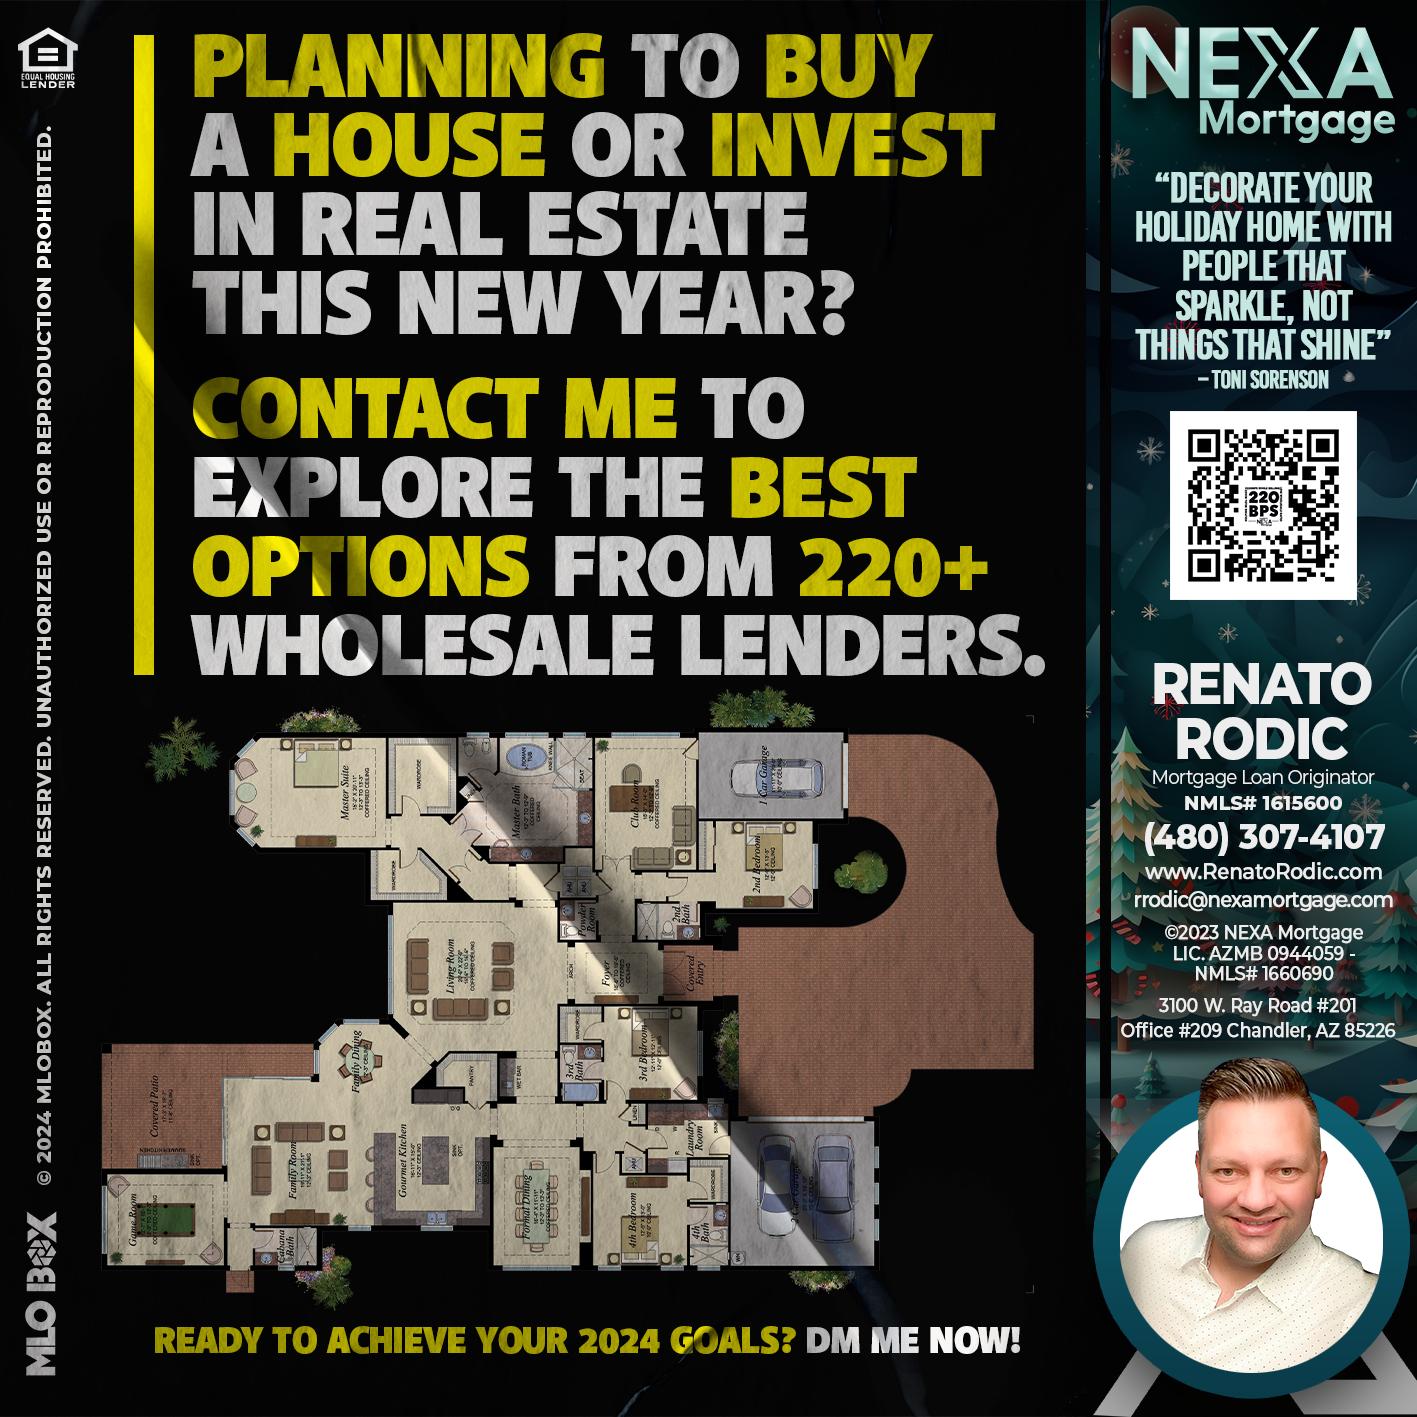 planing to buy - Renato Rodic -Mortgage Loan Originator